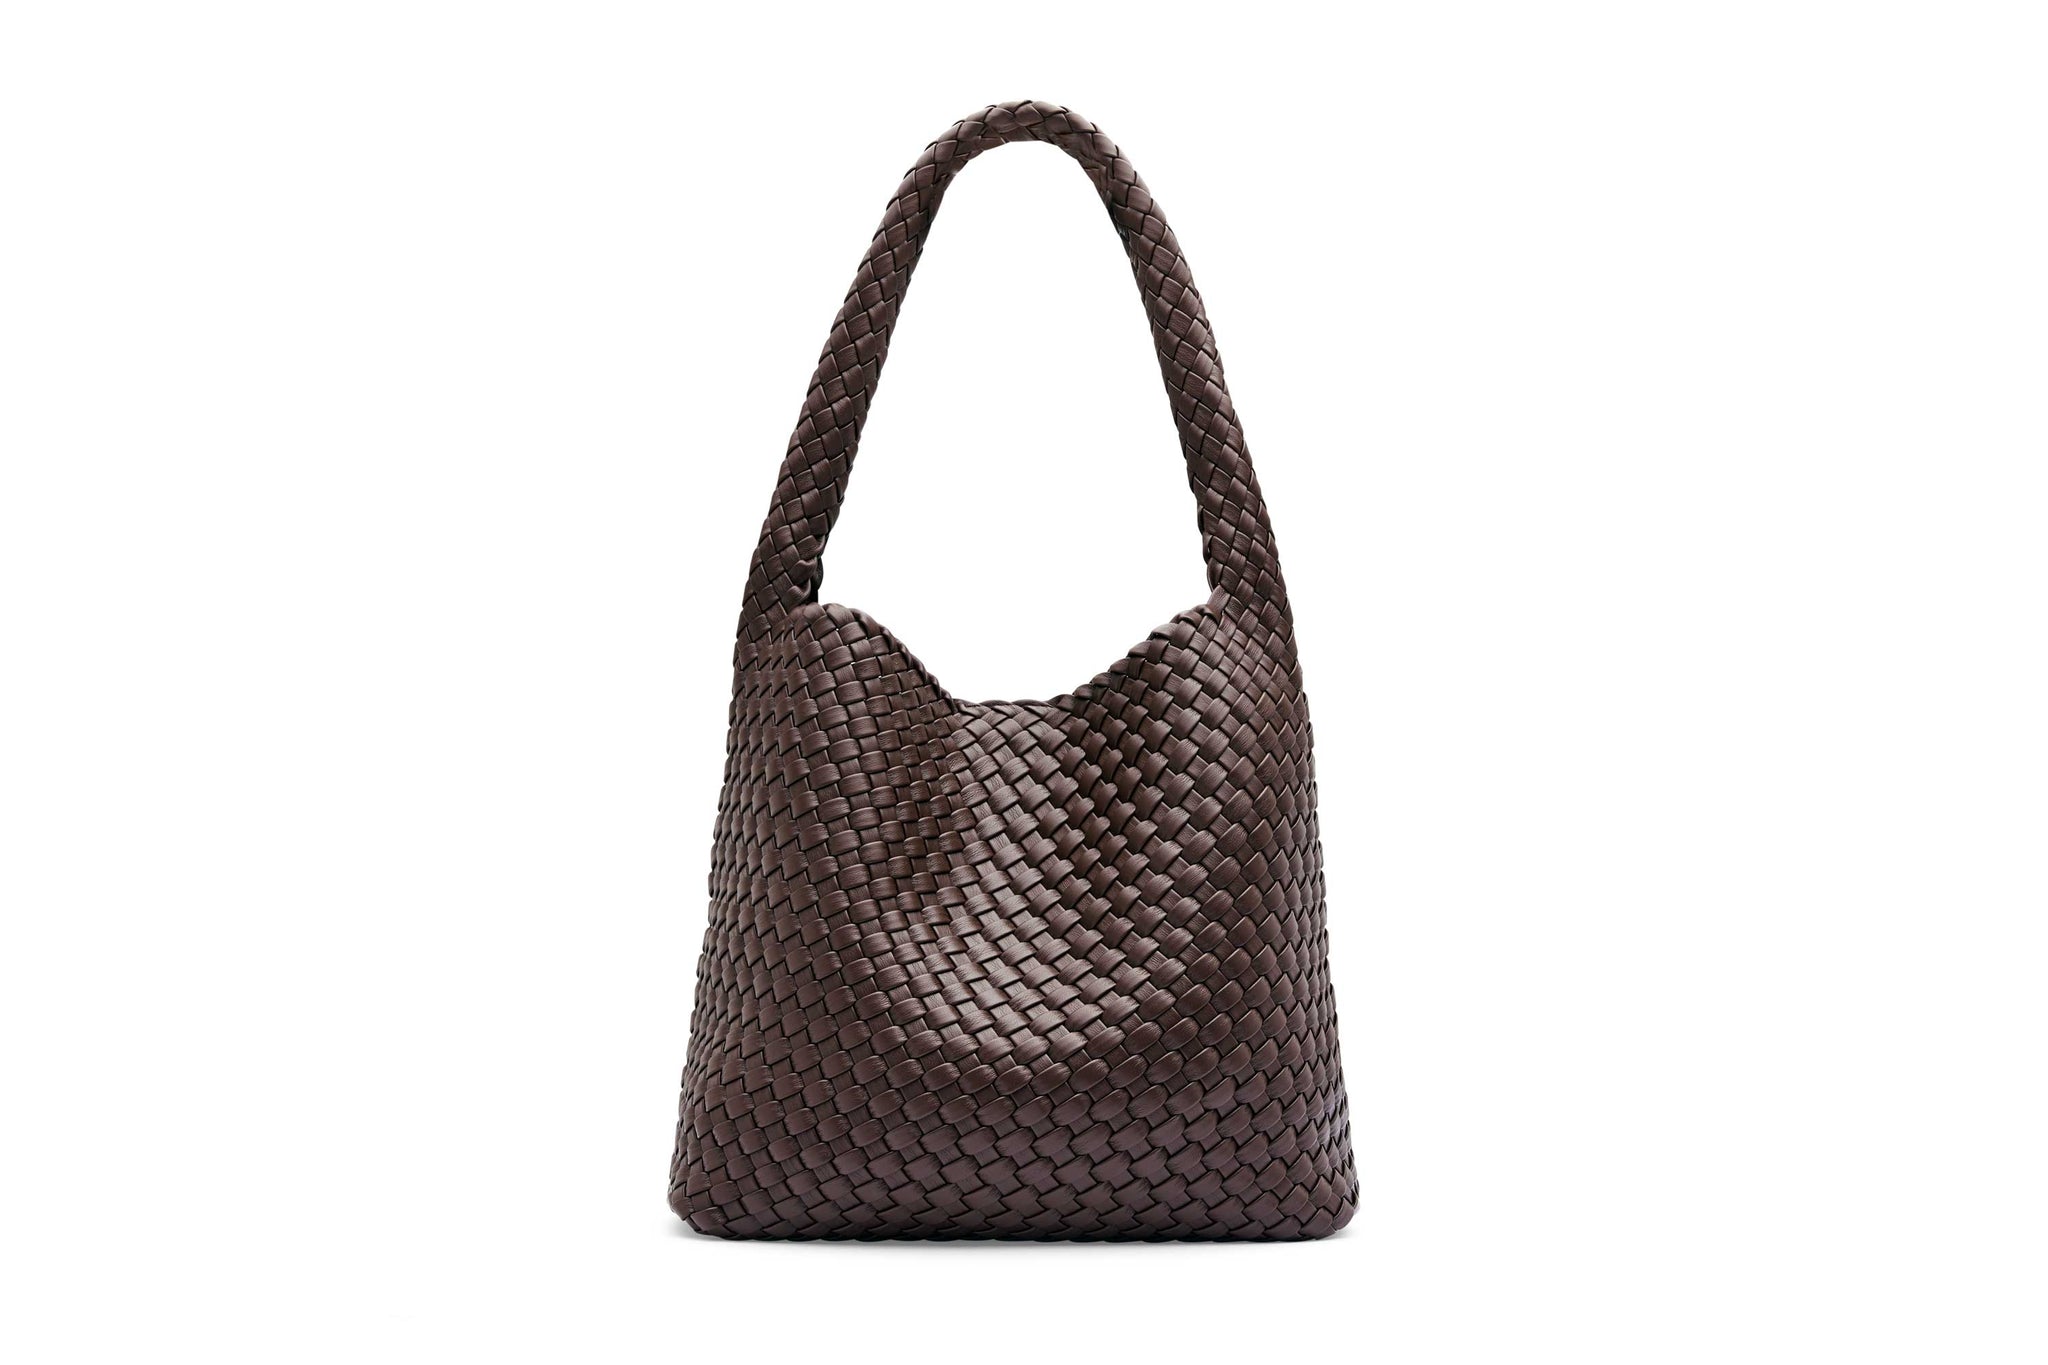 Rylan, Rylan Studio, Brown Woven Alt-Leather Large Tote Handbag